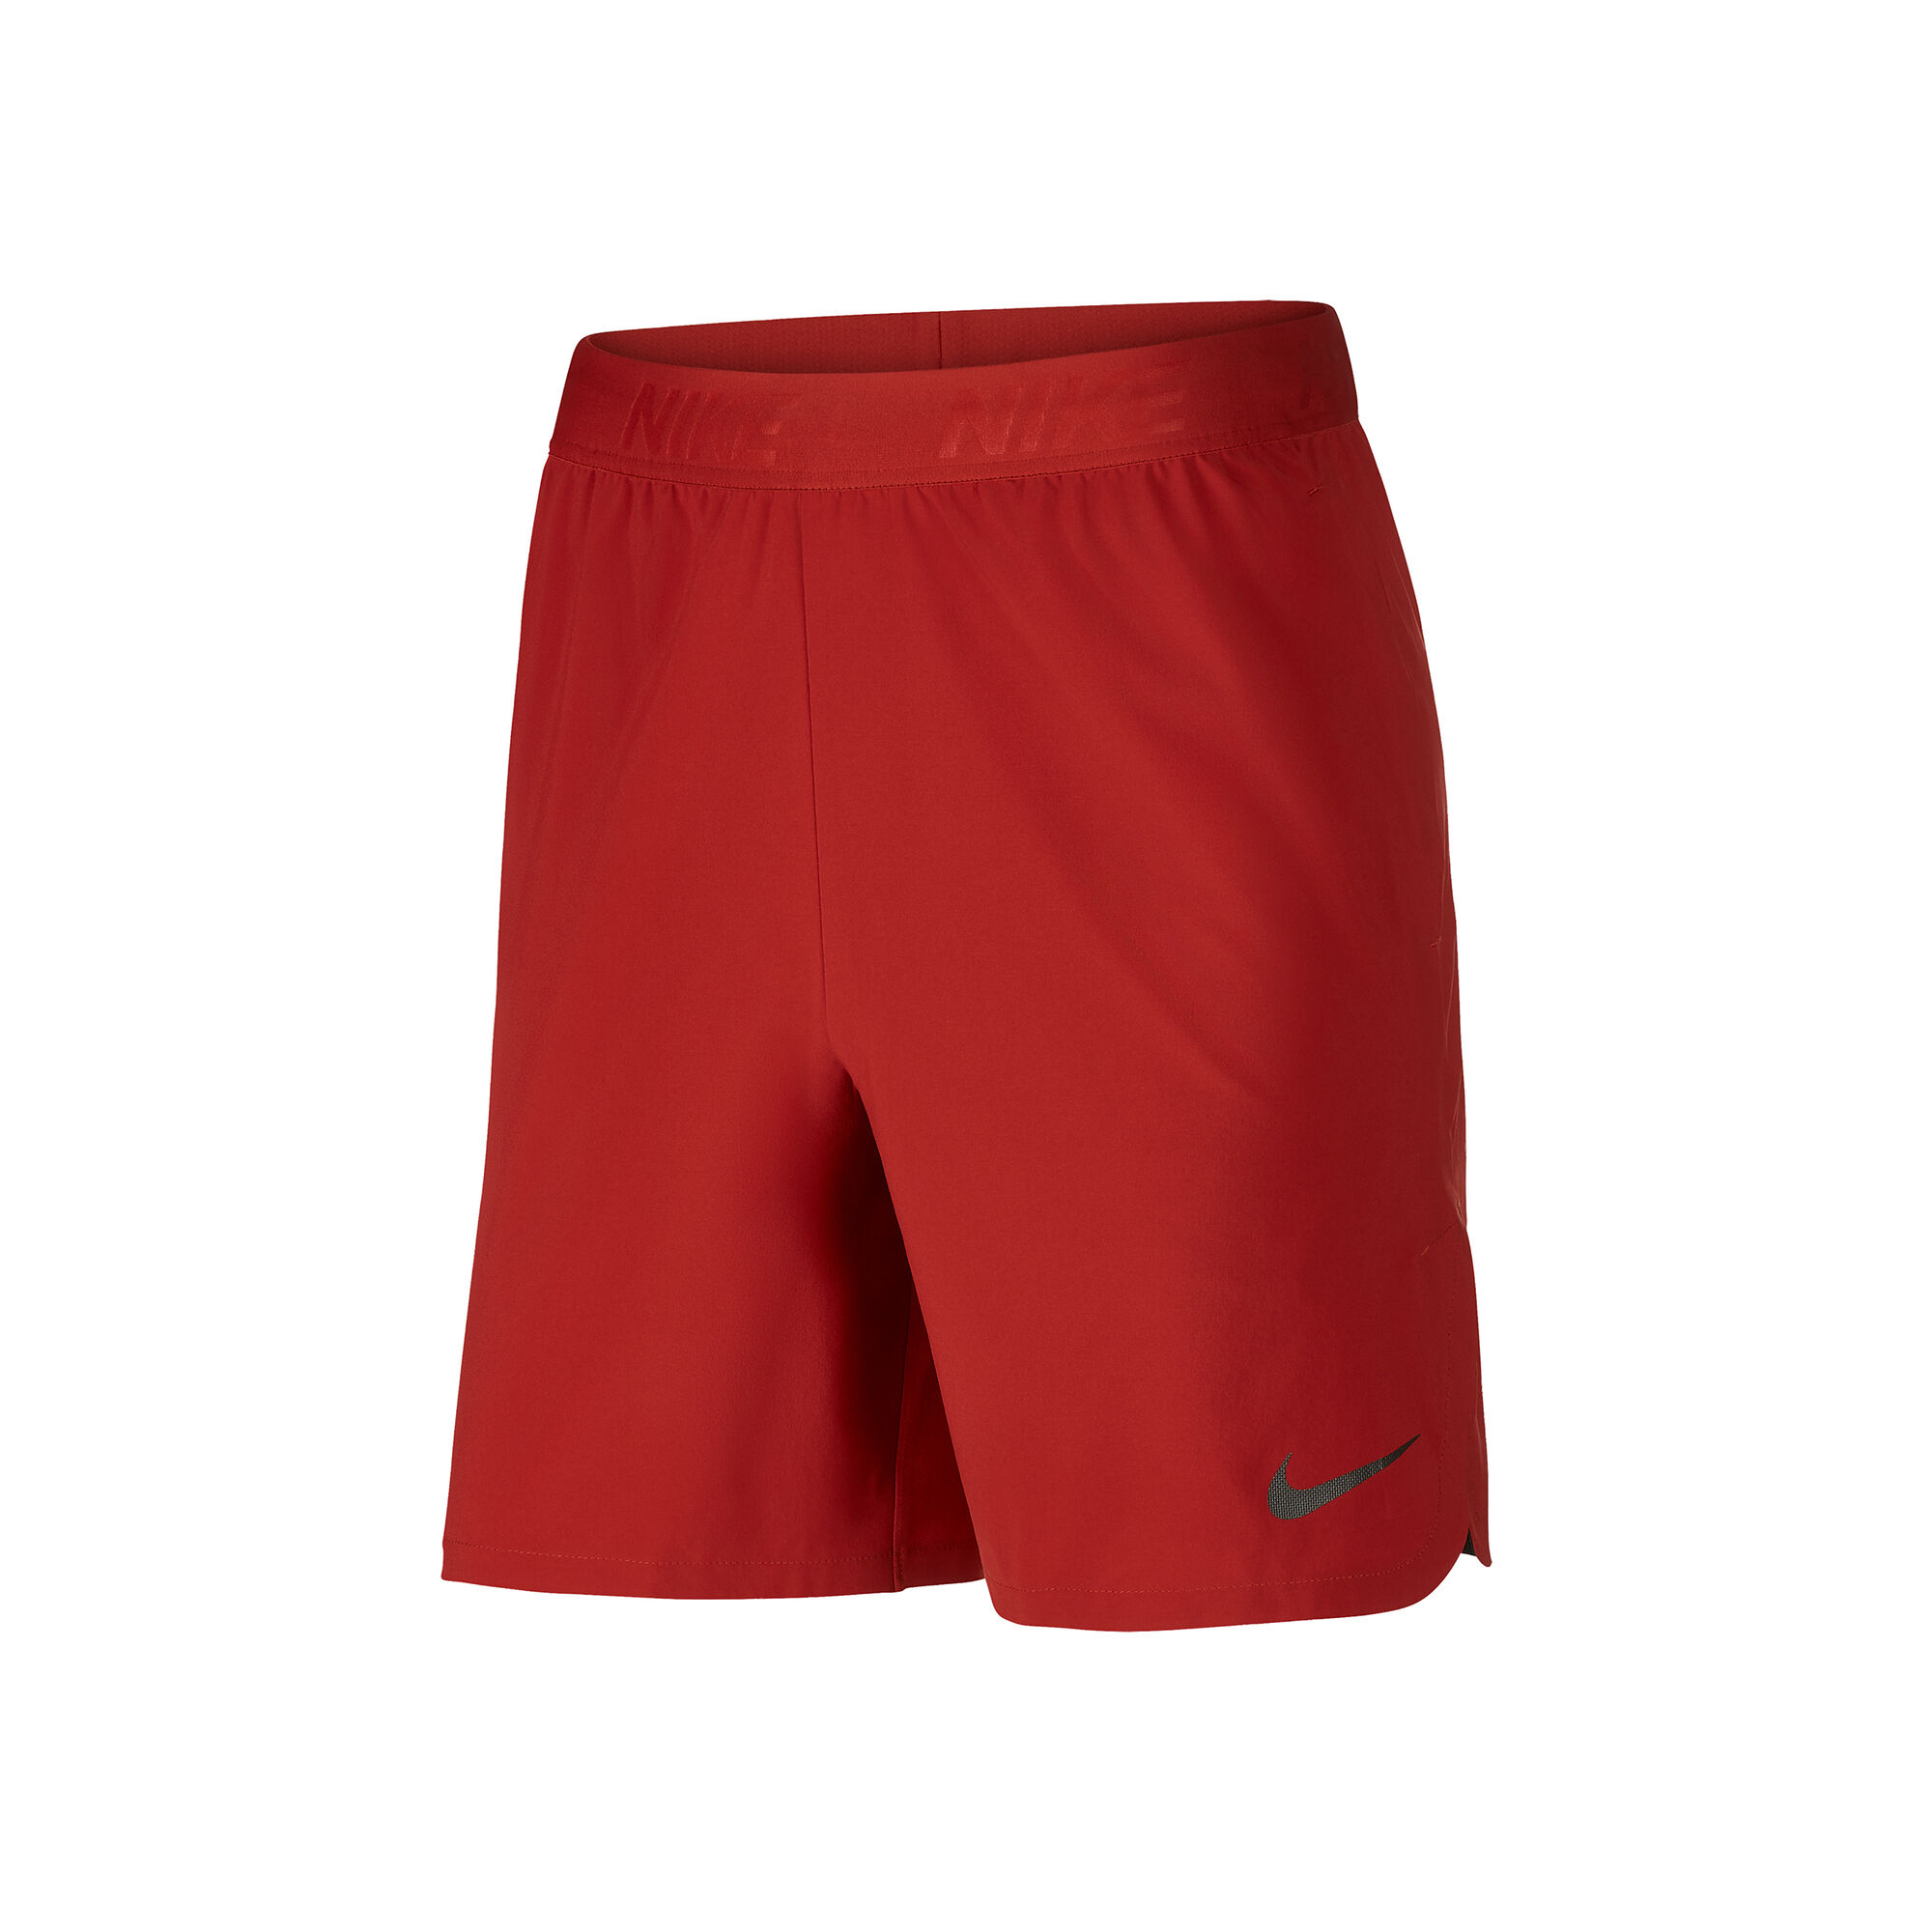 Nike Flex Vent Max Shorts Hombres - Rojo Oscuro, Negro online | Tennis-Point